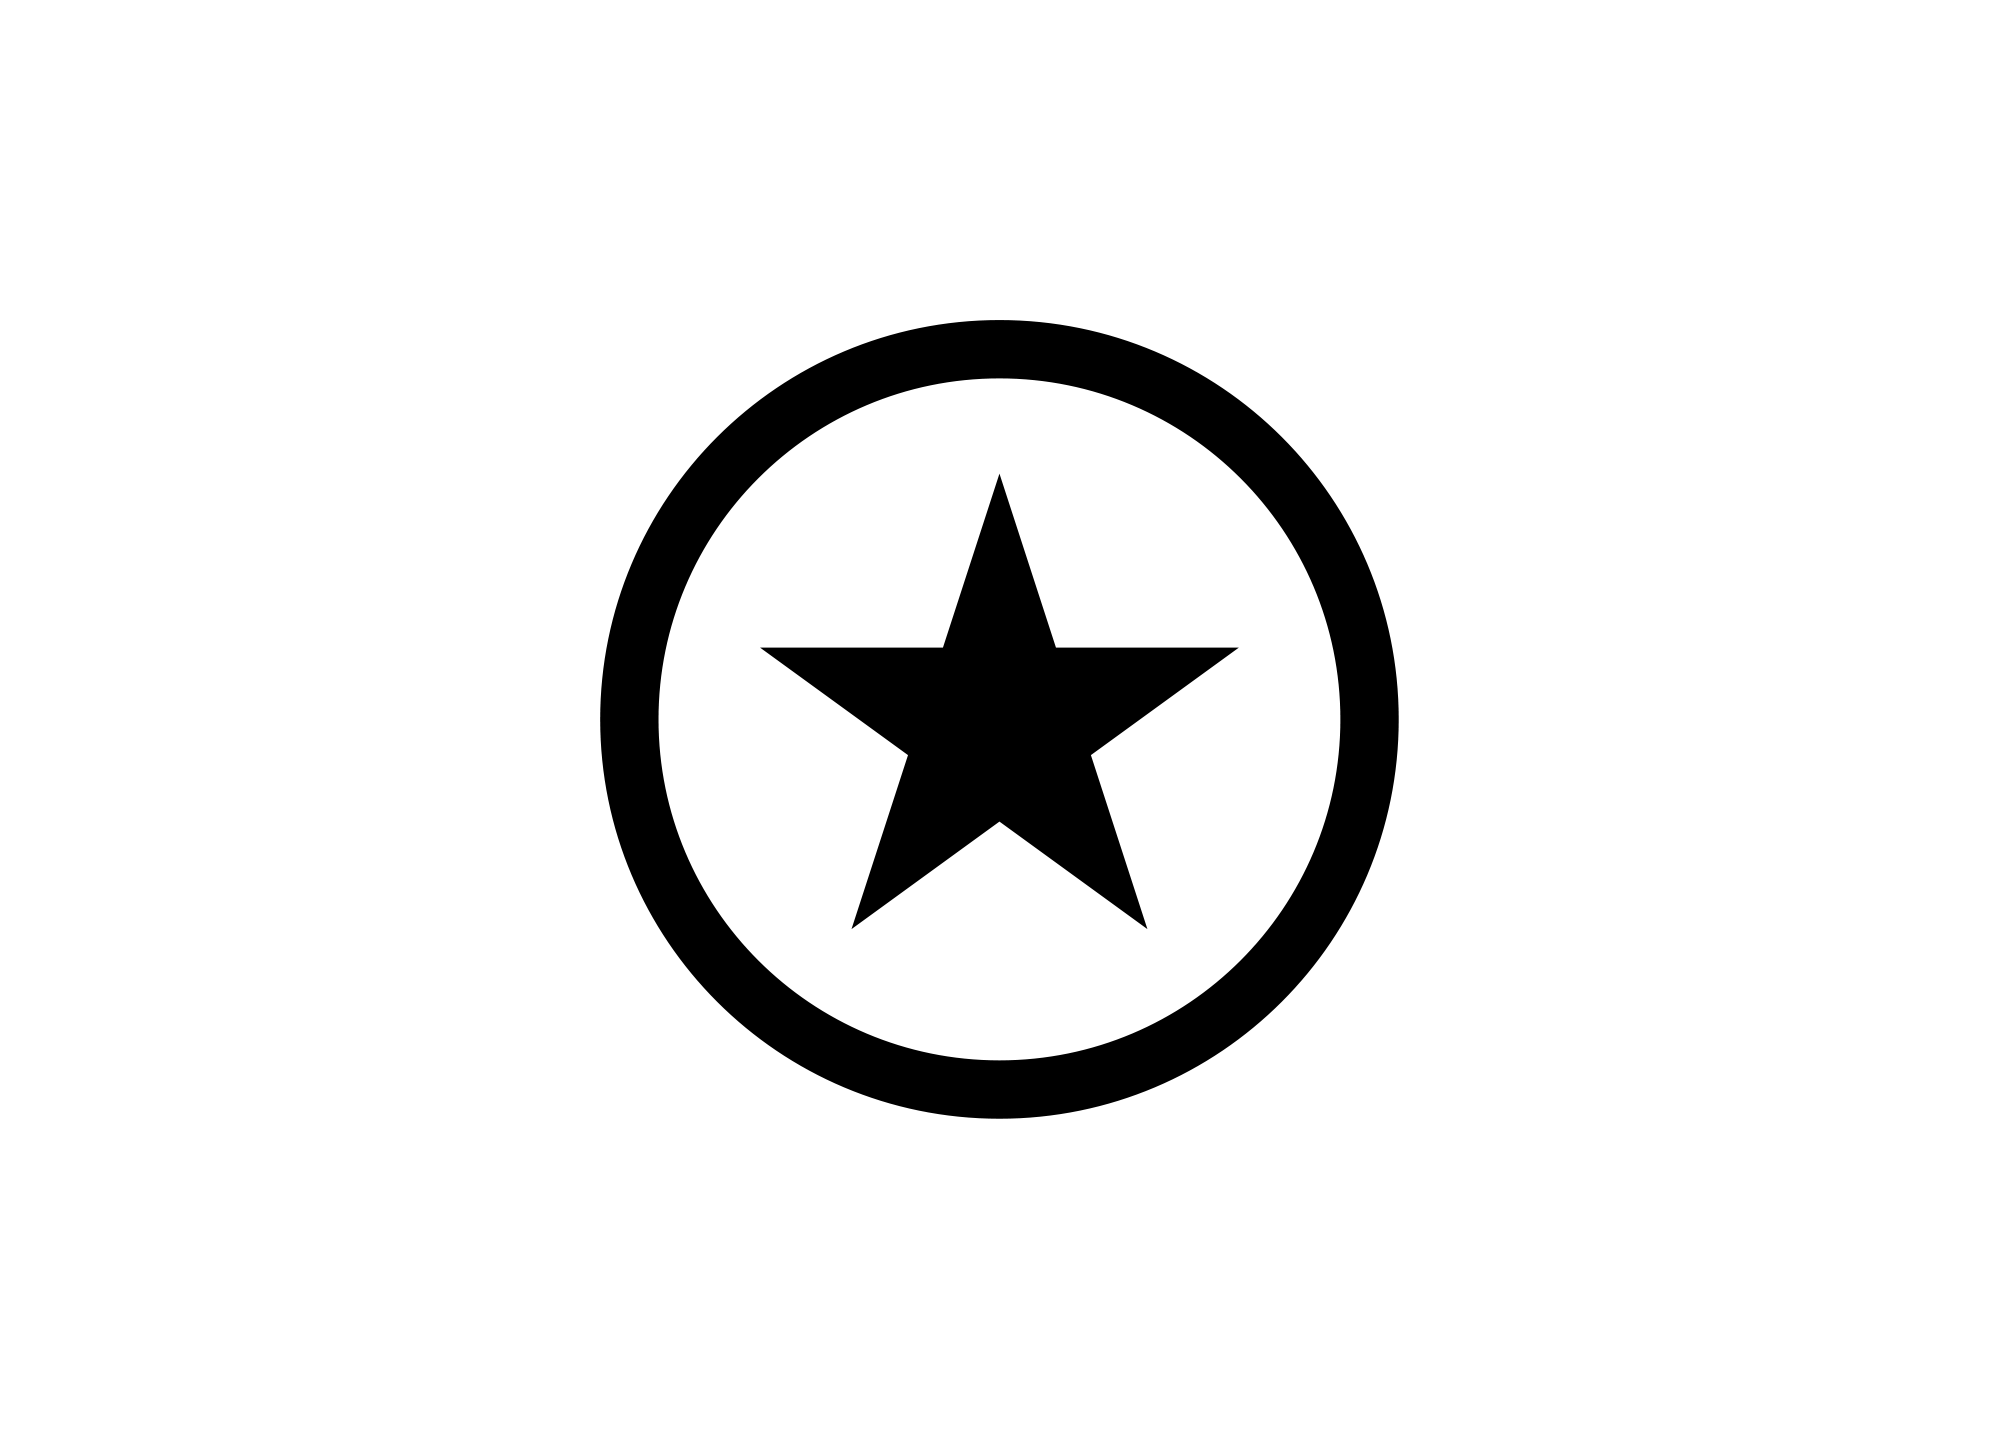 Black and White Star Logo - Black star Logos